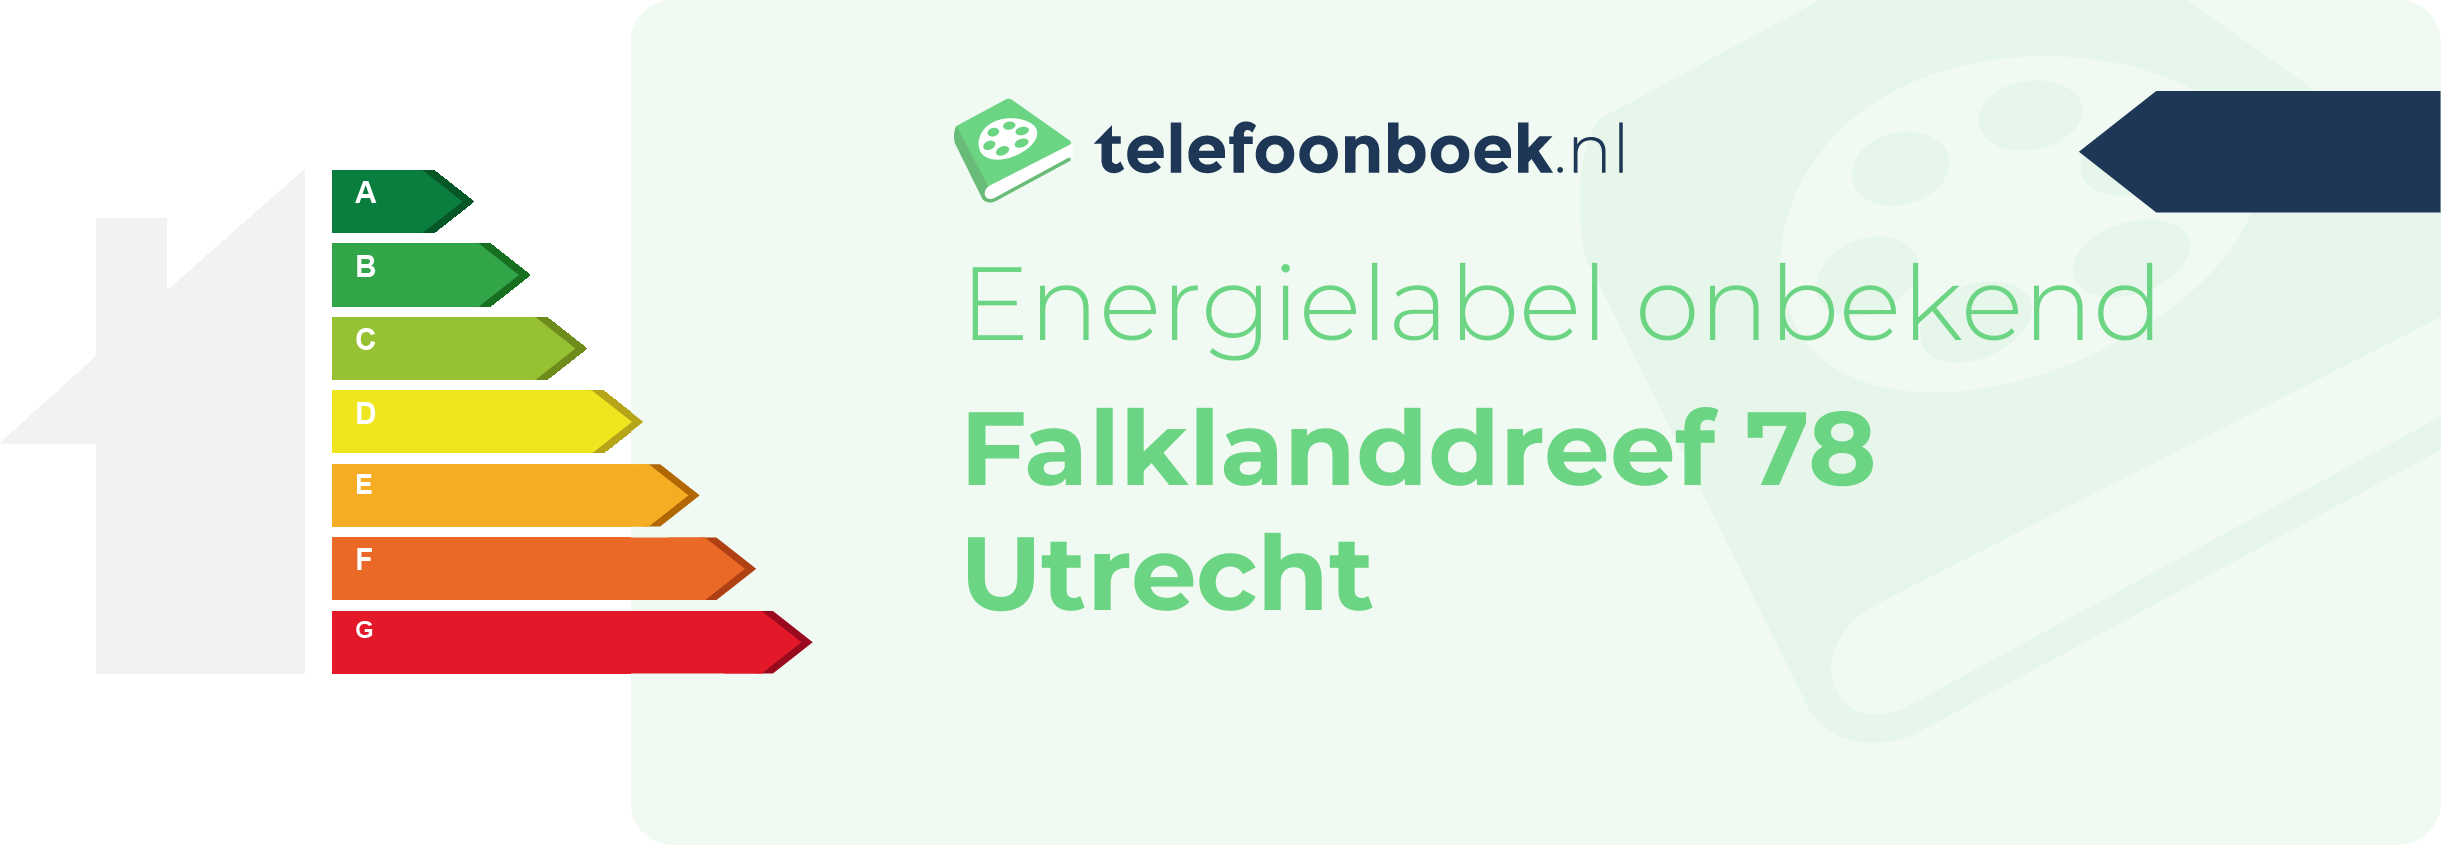 Energielabel Falklanddreef 78 Utrecht